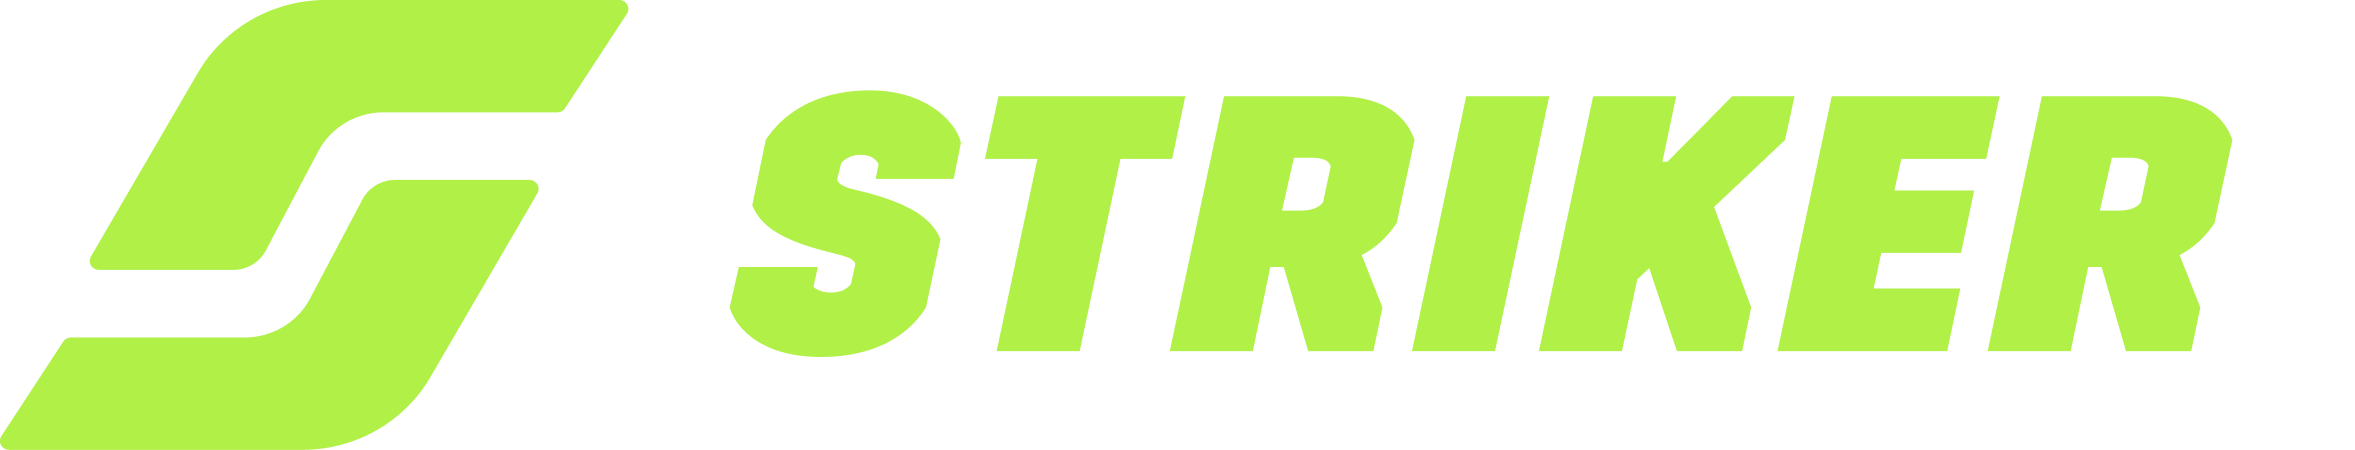 striker-logo